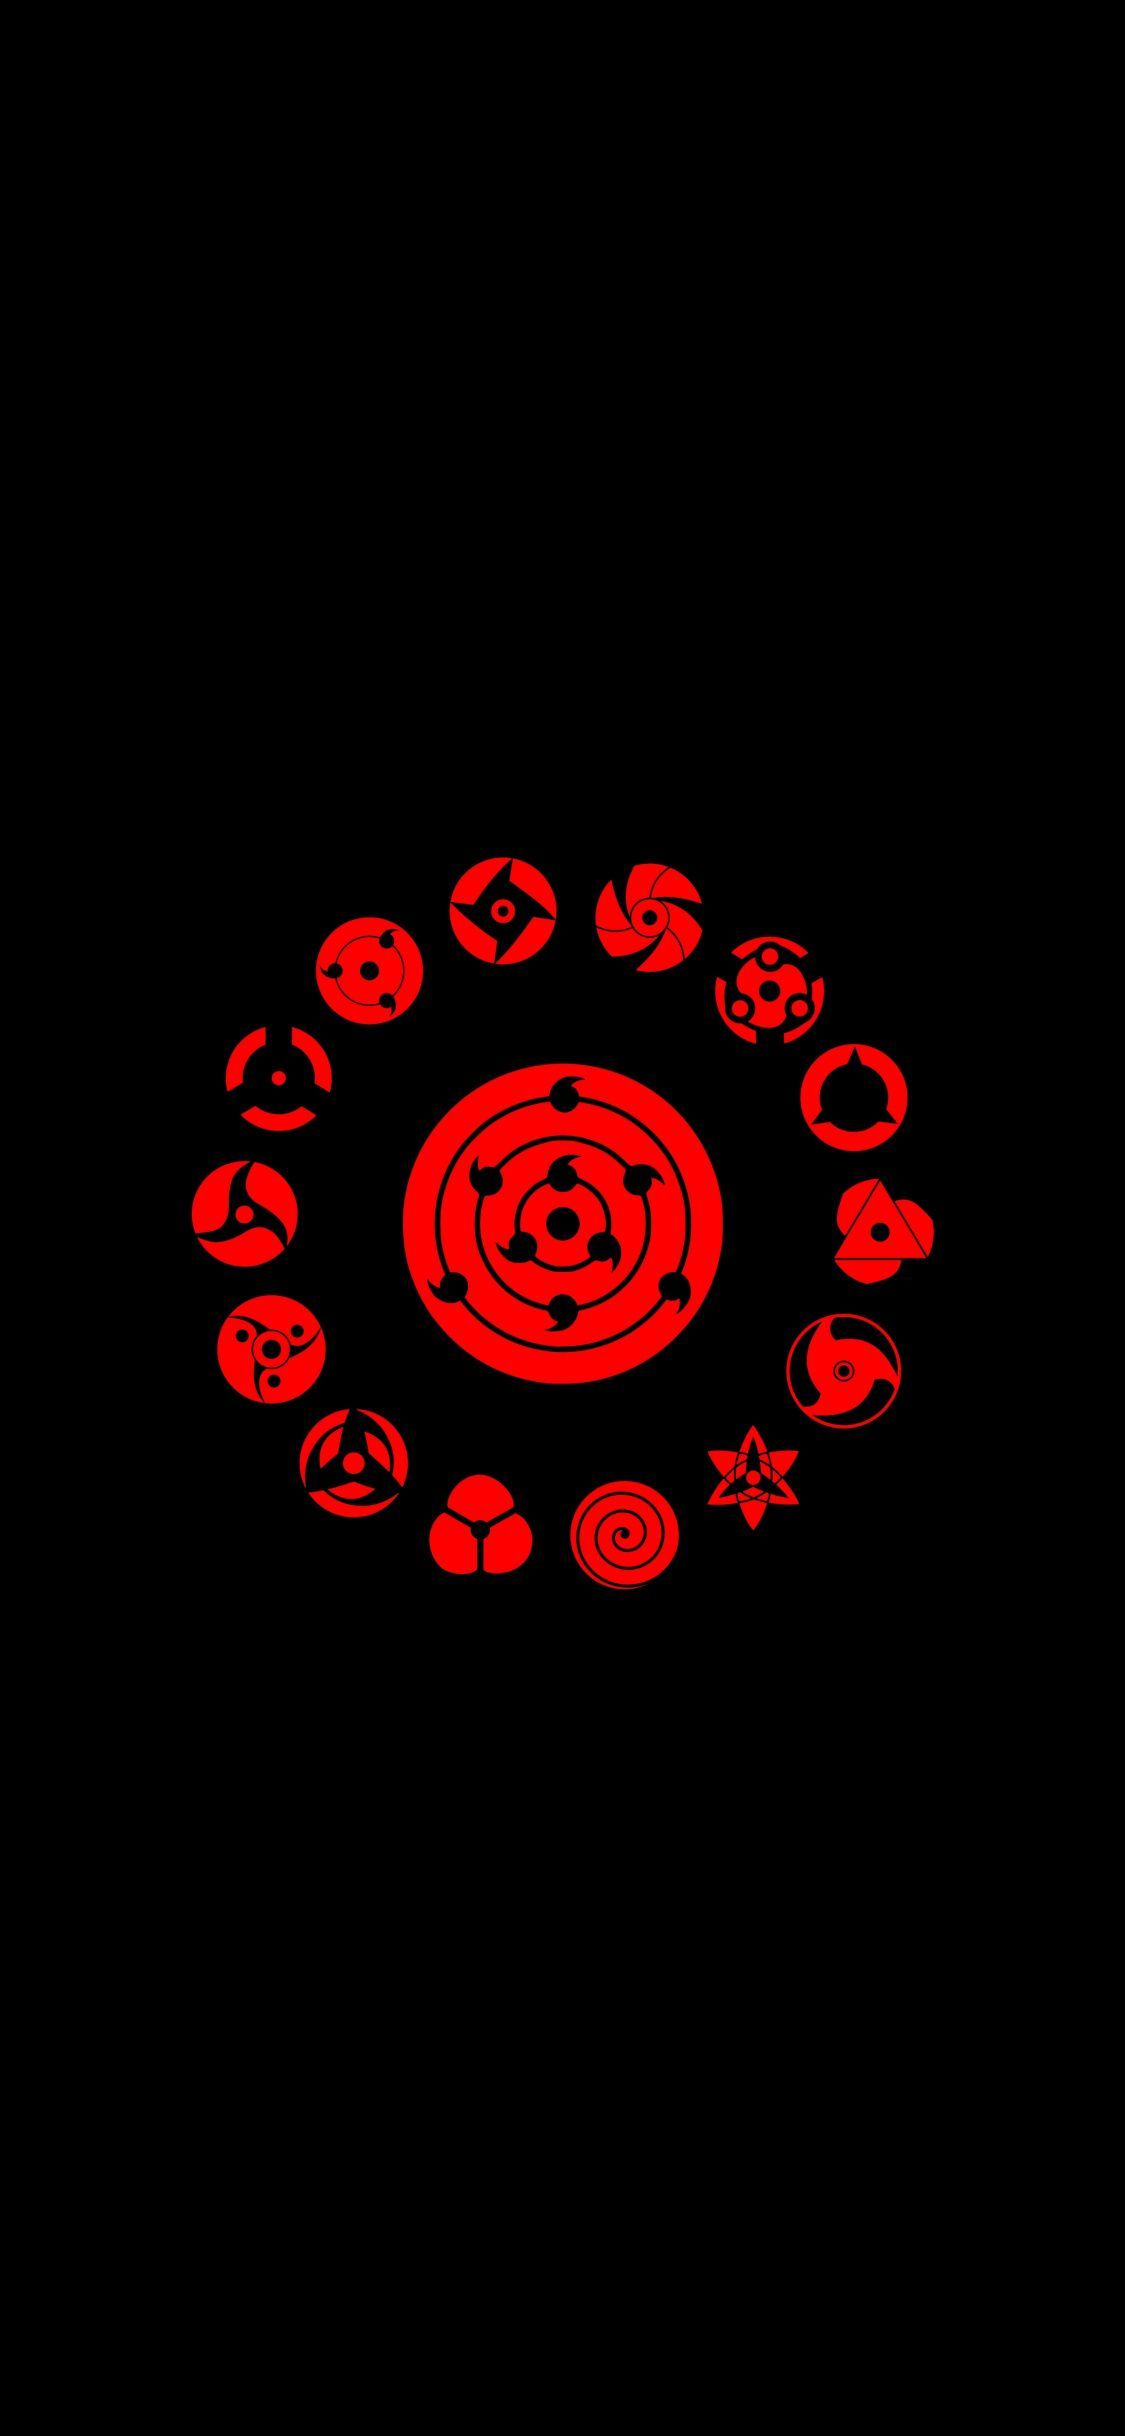 Naruto Symbols iPhone Wallpaper